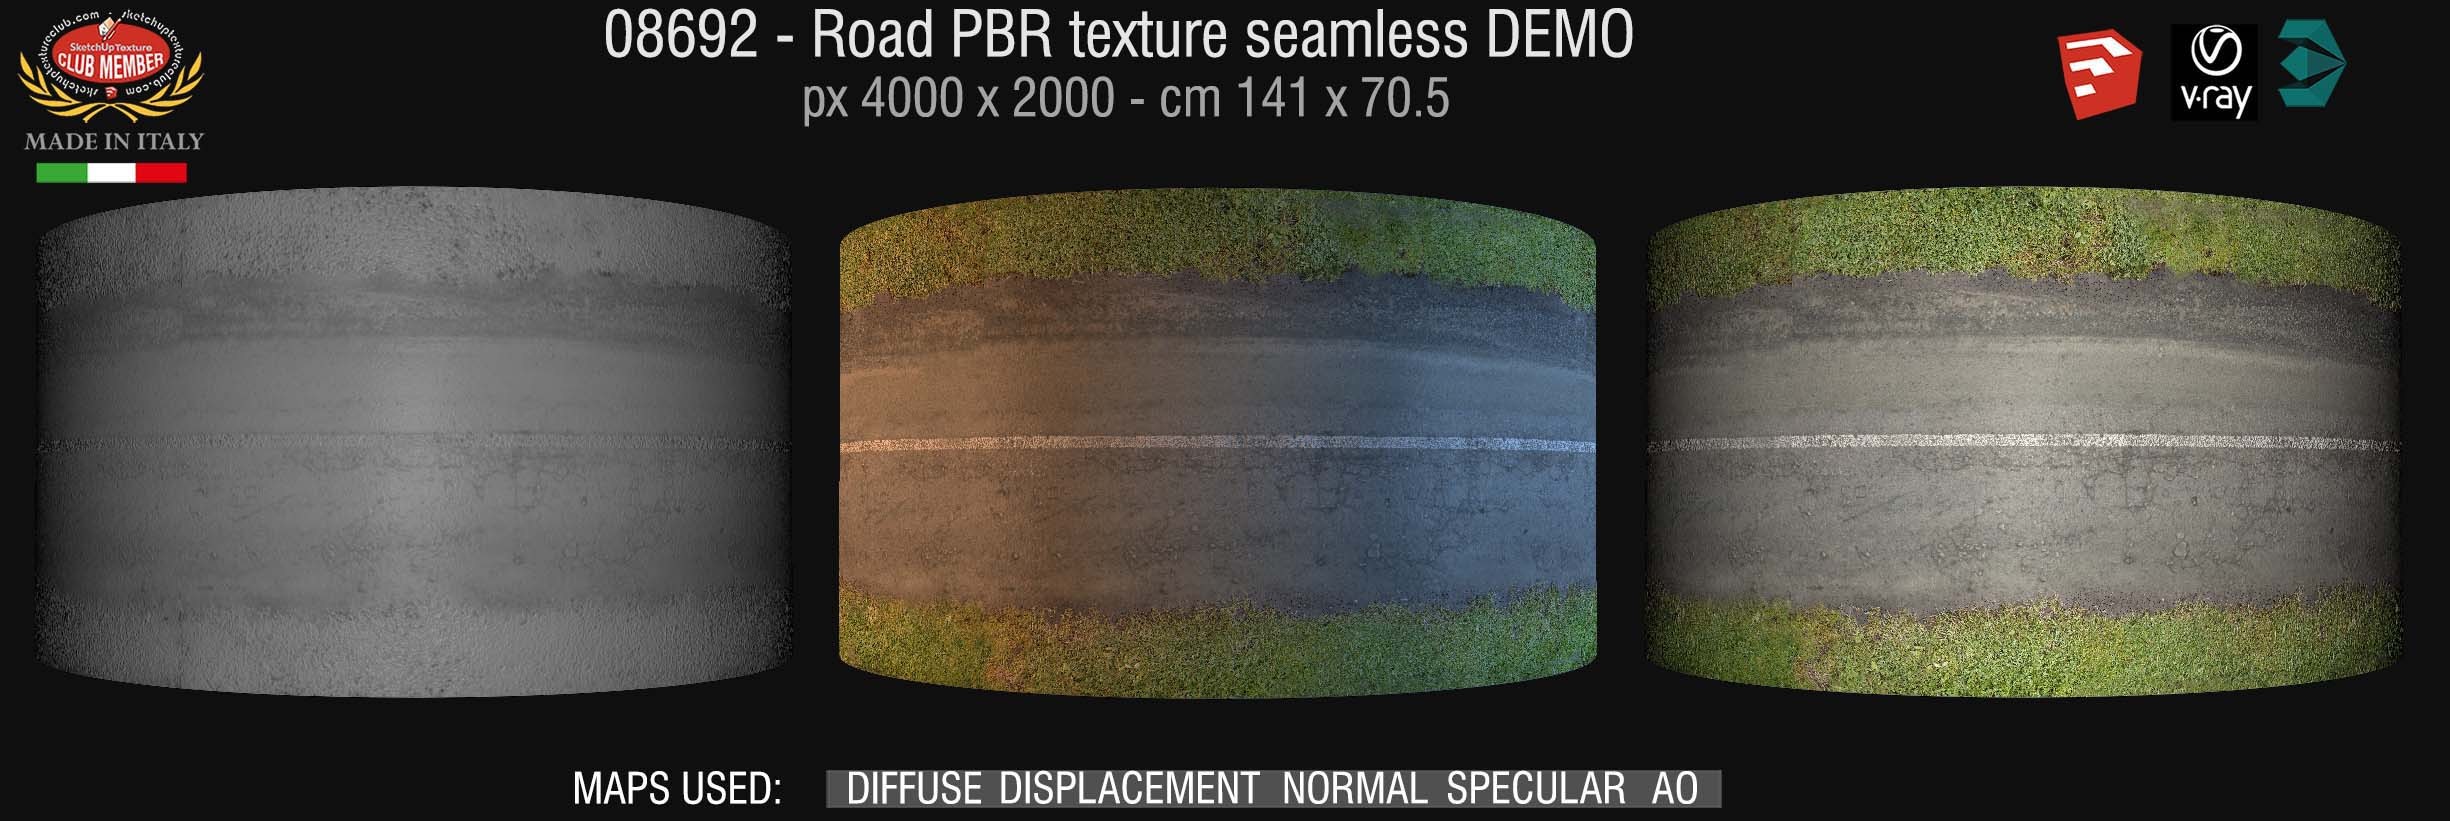 08692 Road PBR texture seamless DEMO